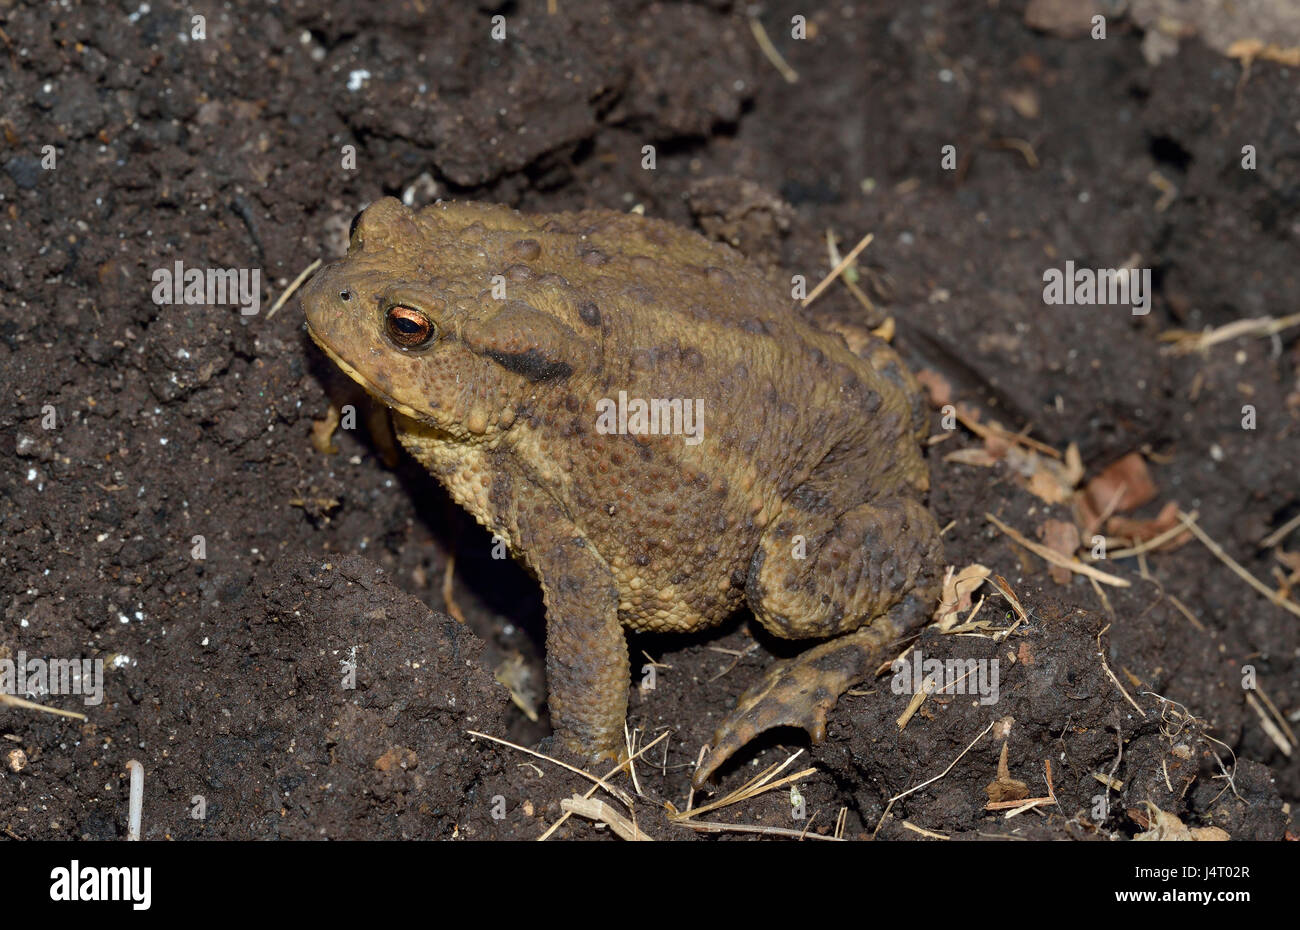 Common Toad - Bufo bufo Amphibian of gardens & wetlands Stock Photo